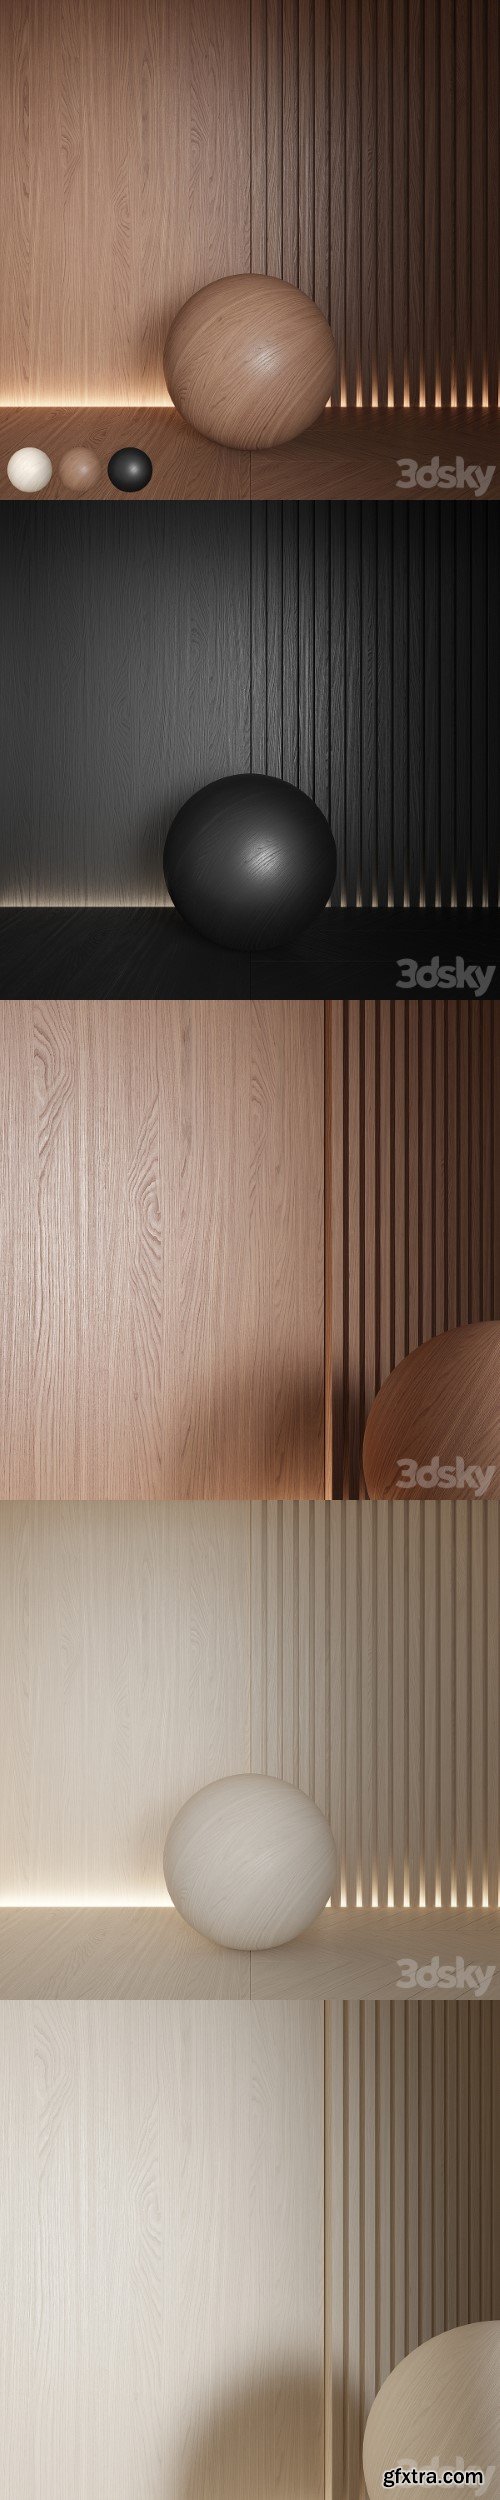 Wood material seamless